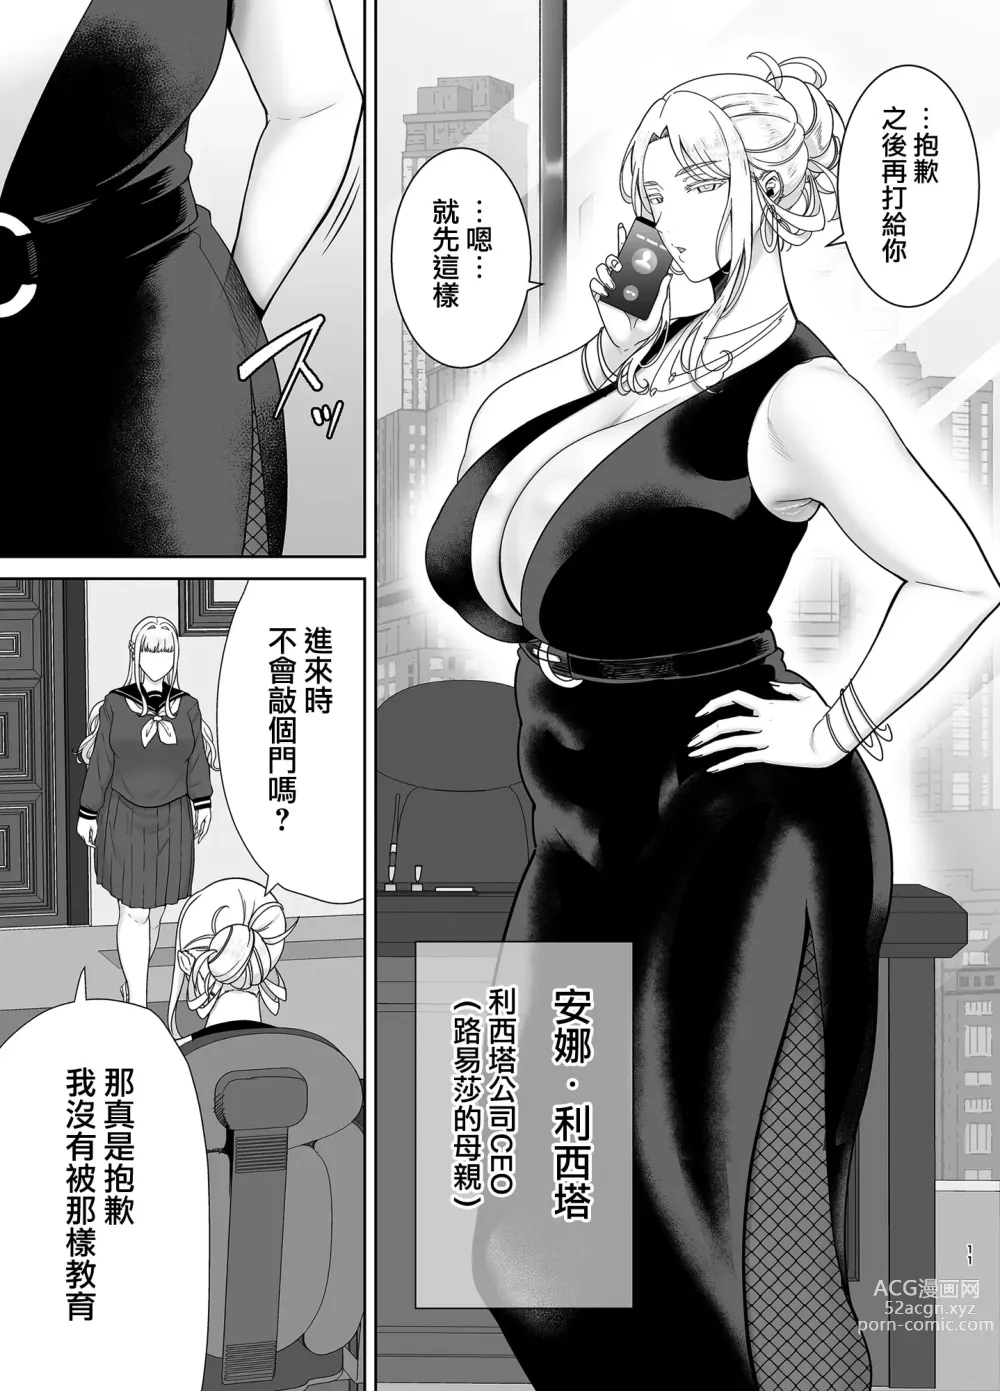 Page 11 of manga 聖華女学院公認竿おじさん7